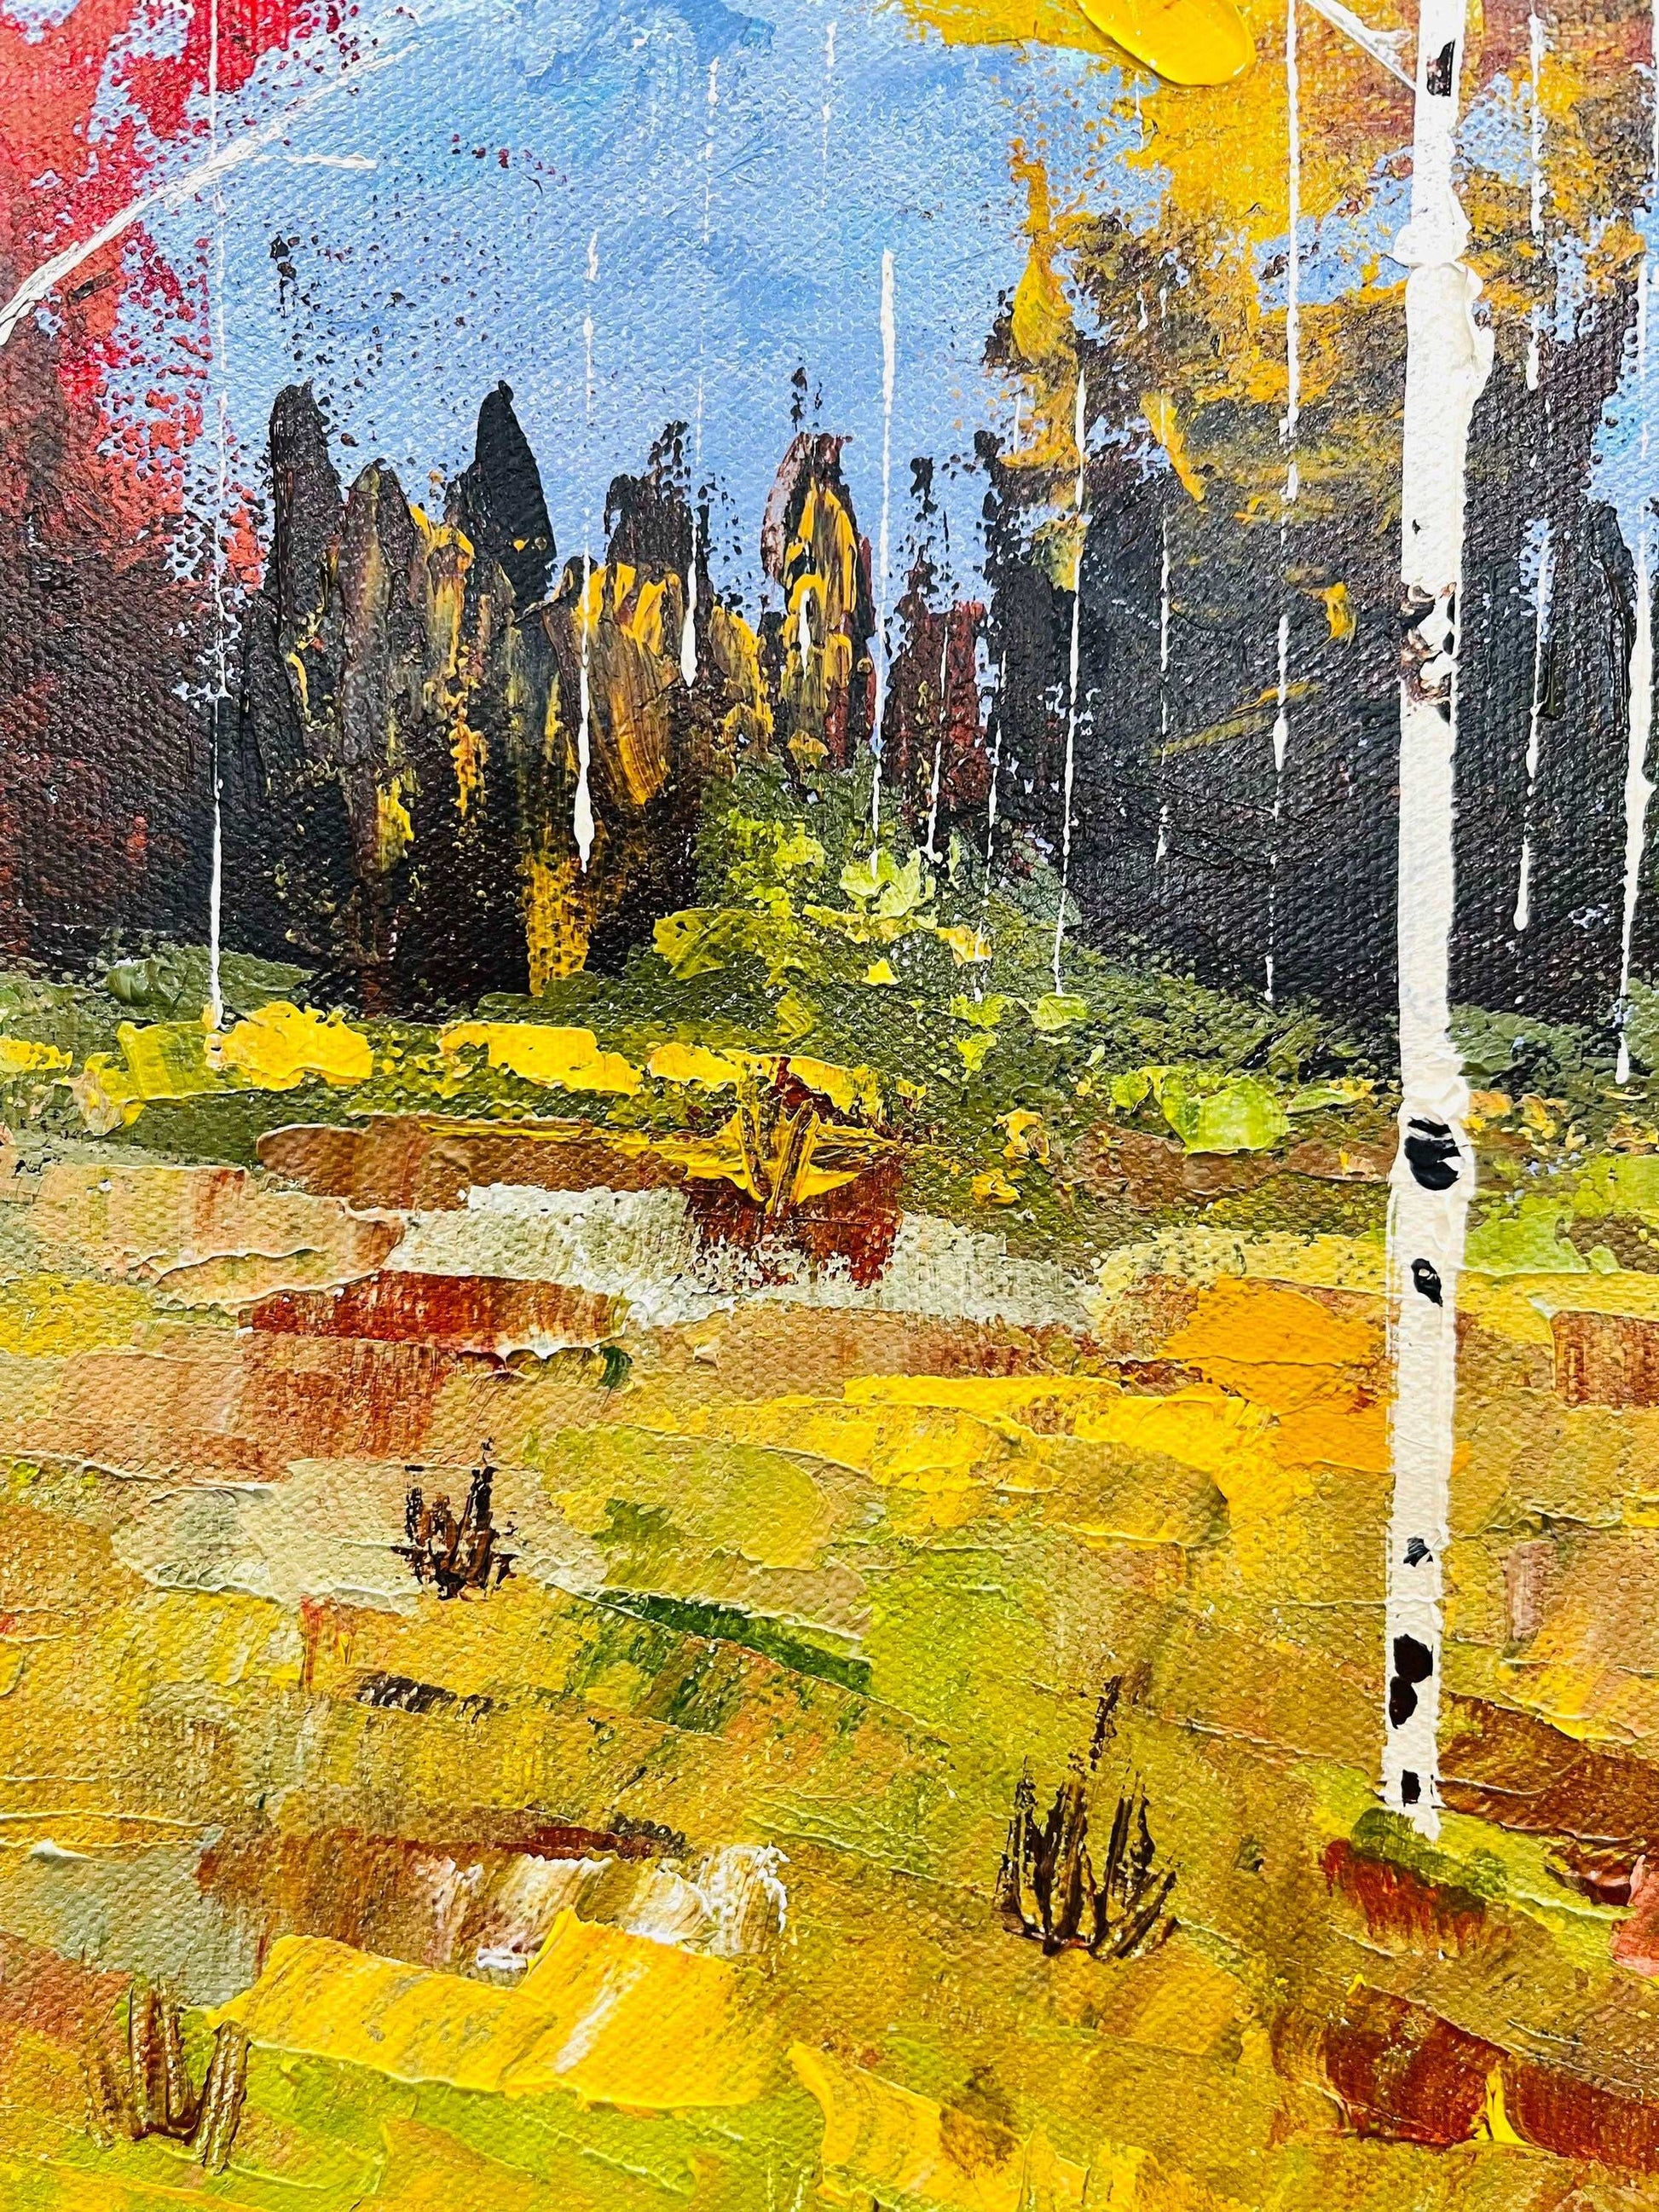 Original Impasto Landscape Aspen Painting on Canvas